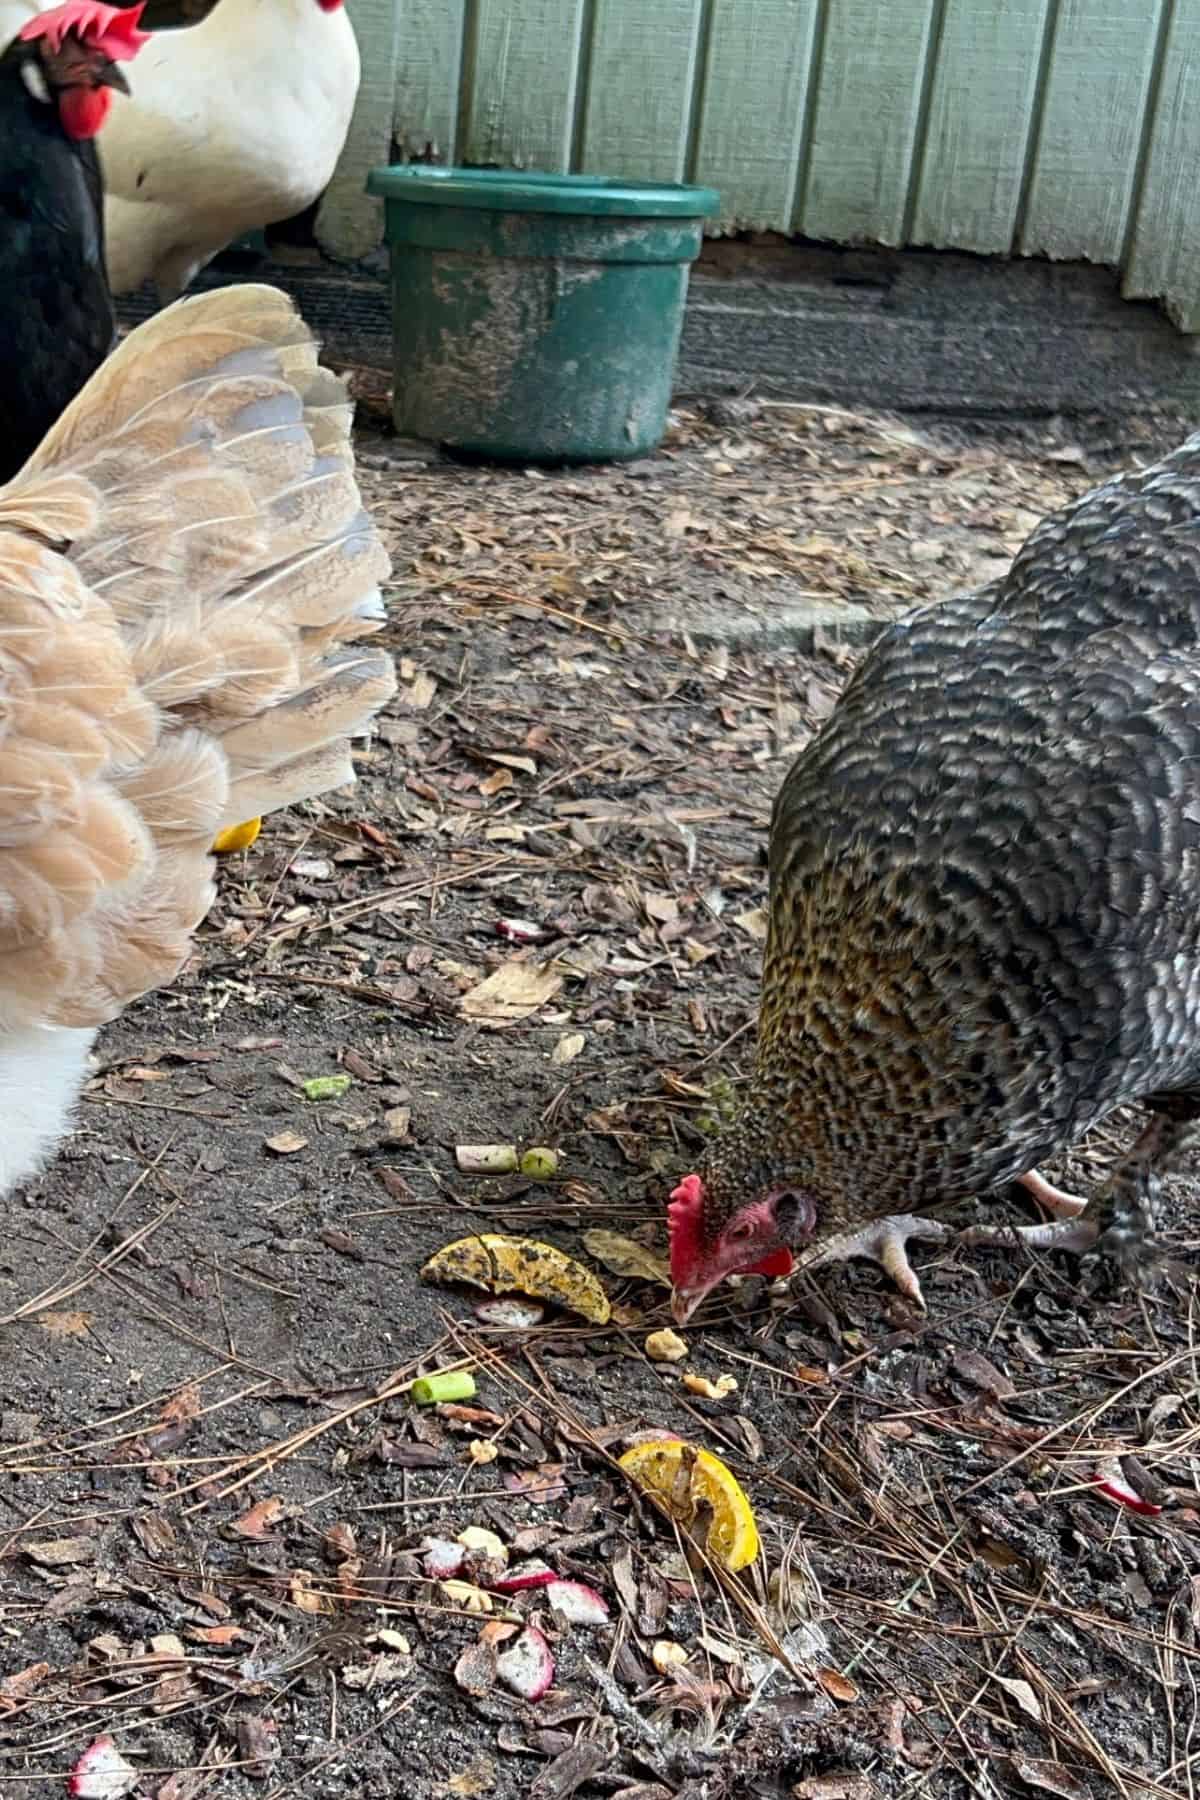 Chicken eating oranges off the ground.